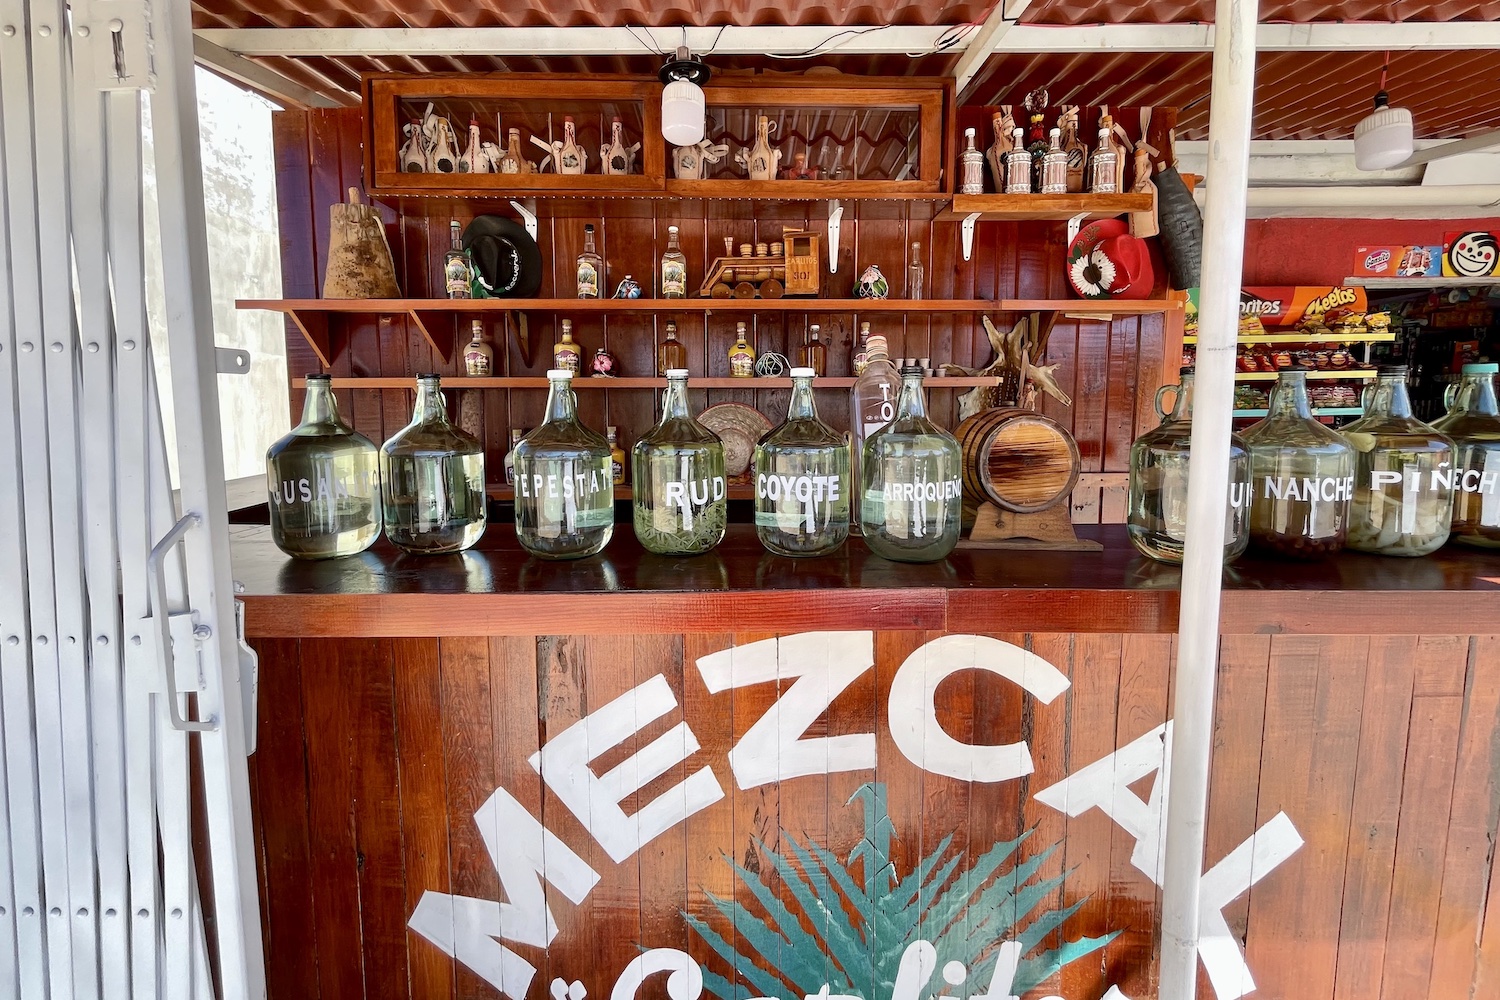 jogs of mezcal sitting on a wooden bar at carlitos mezcal